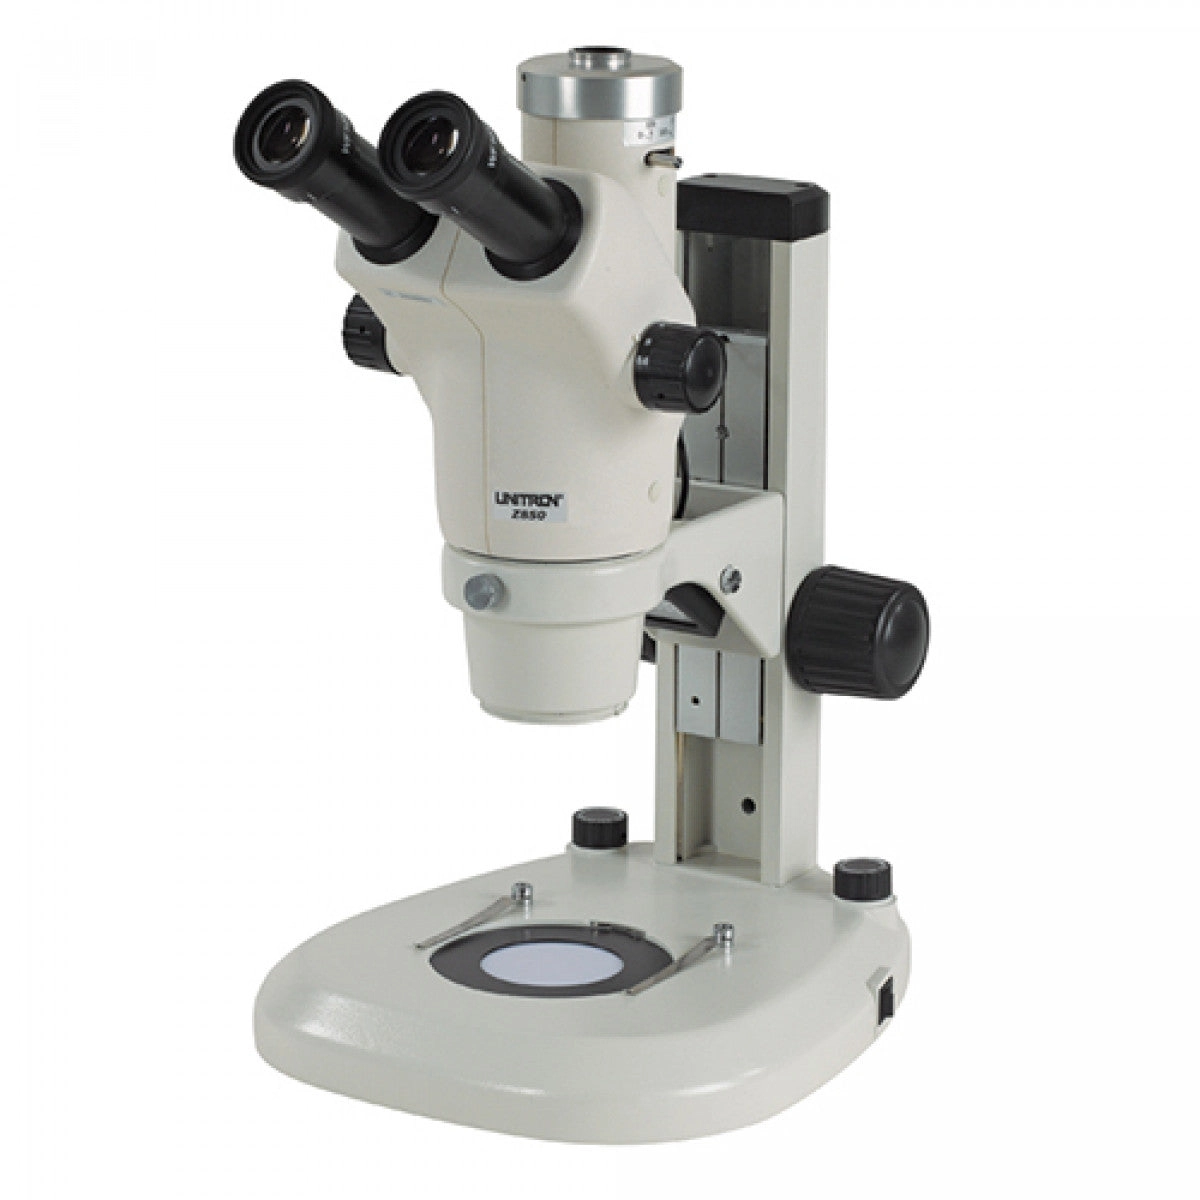 Unitron Z650HR Trinocular High Resolution Zoom Stereo Microscope on Flex Arm Stand